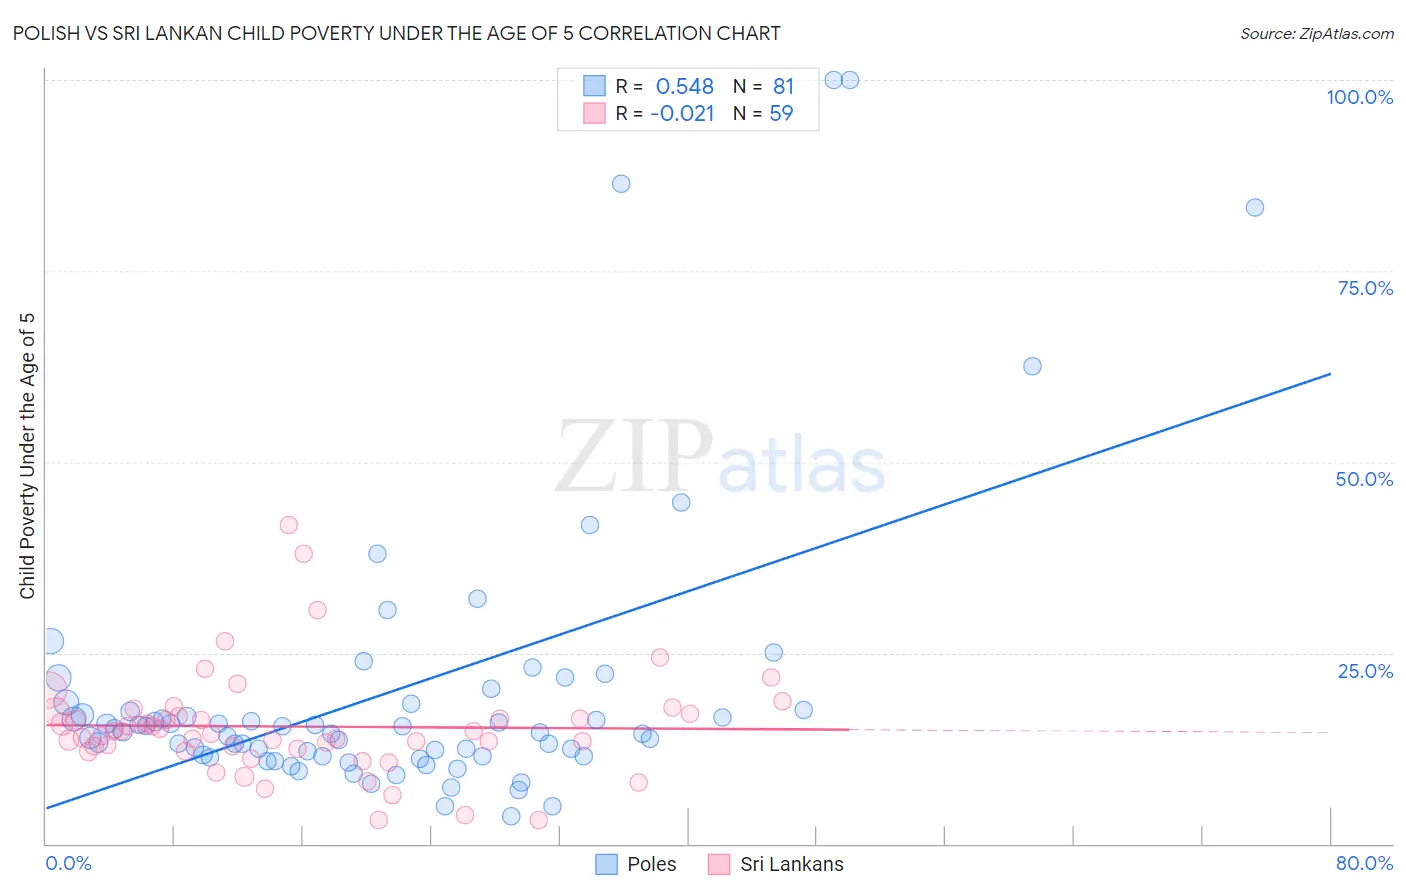 Polish vs Sri Lankan Child Poverty Under the Age of 5